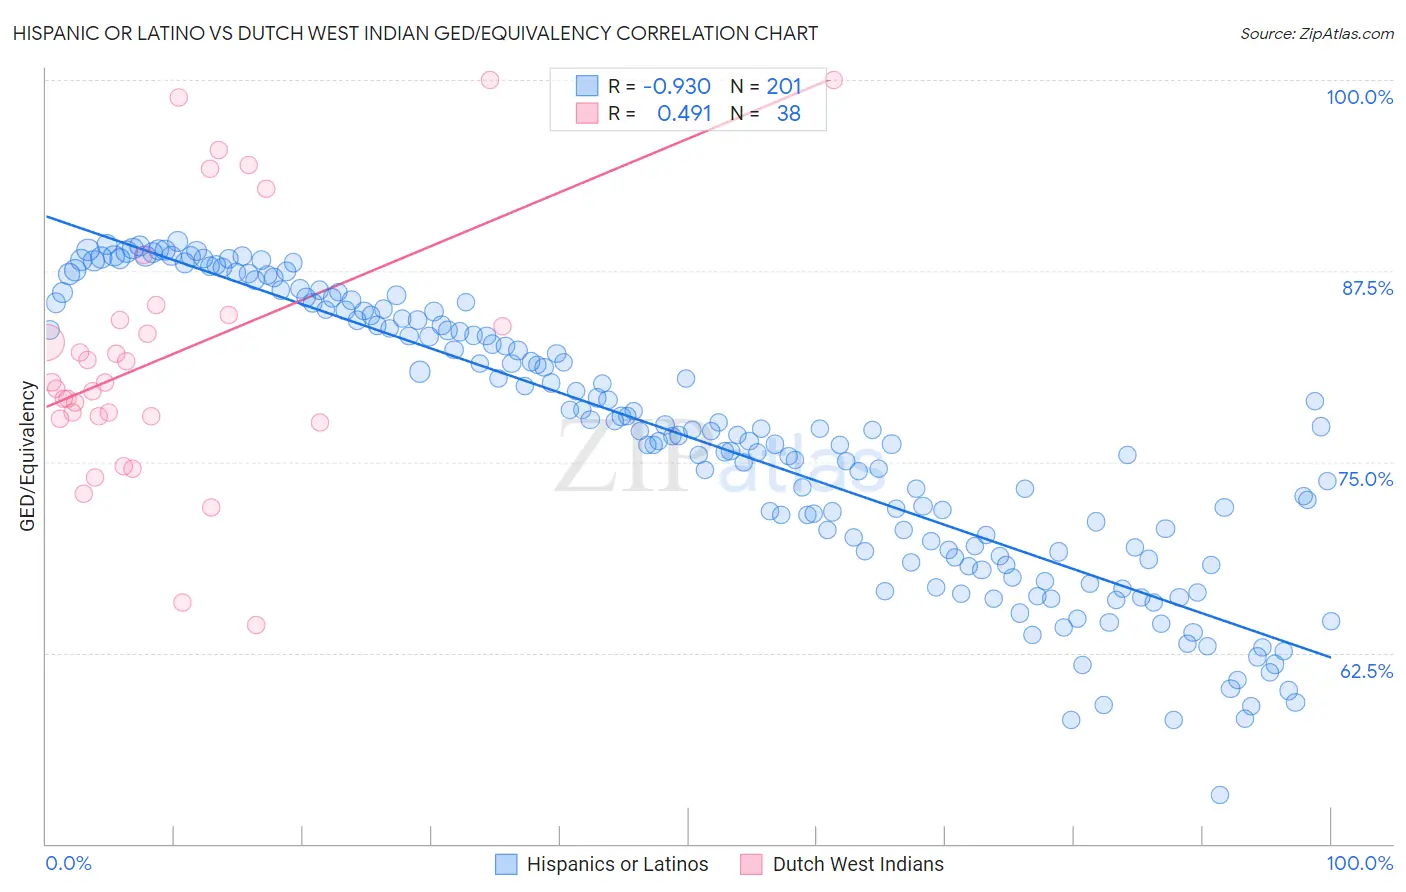 Hispanic or Latino vs Dutch West Indian GED/Equivalency